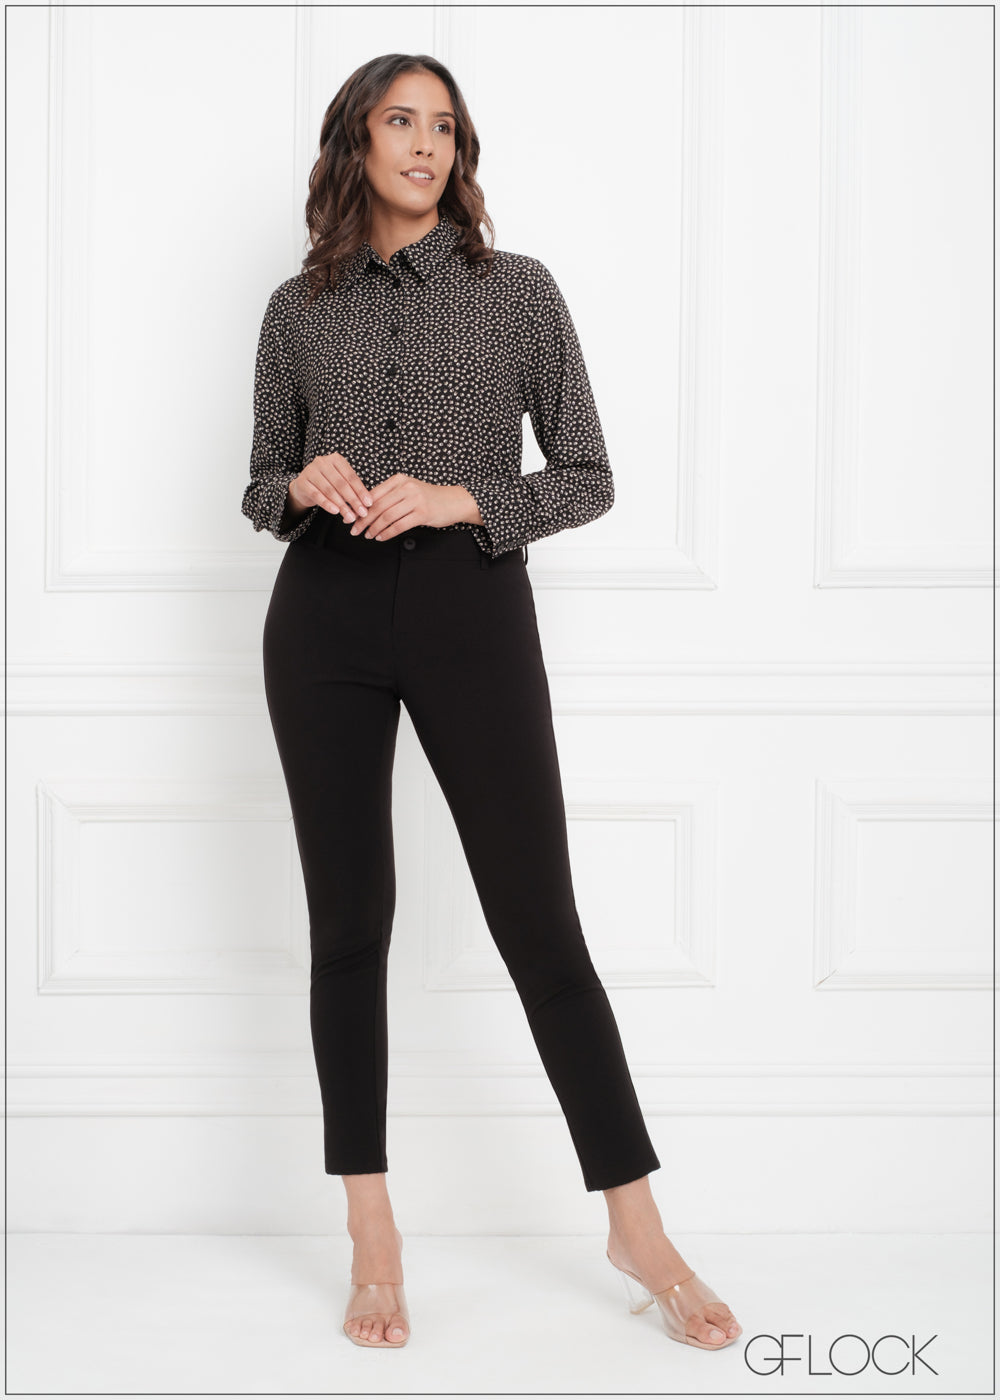 Sleek Workwear Pant - Short Length - 150923